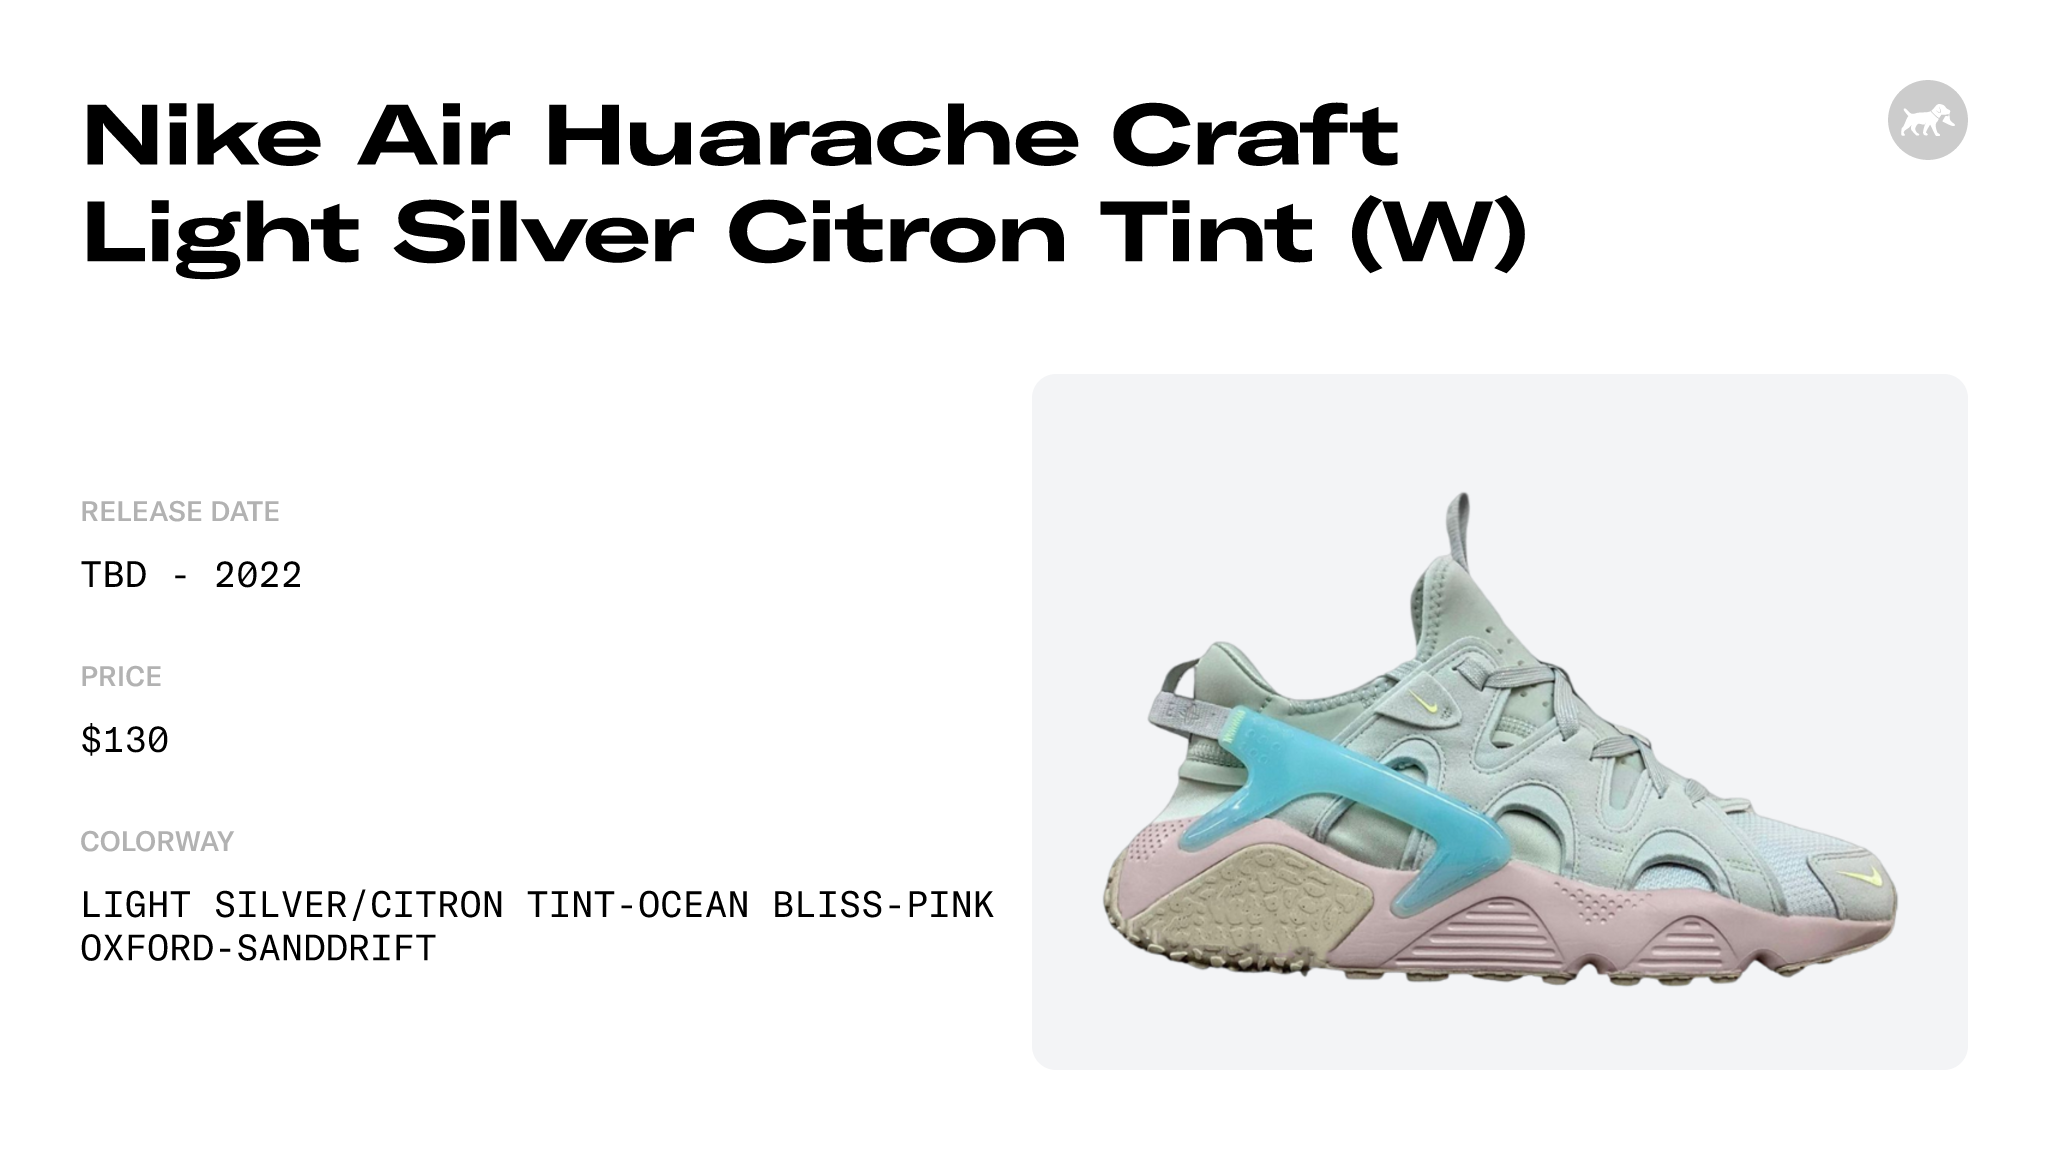 The Nike Air Huarache Craft Light Silver Citron Tint Ushers In A New Era